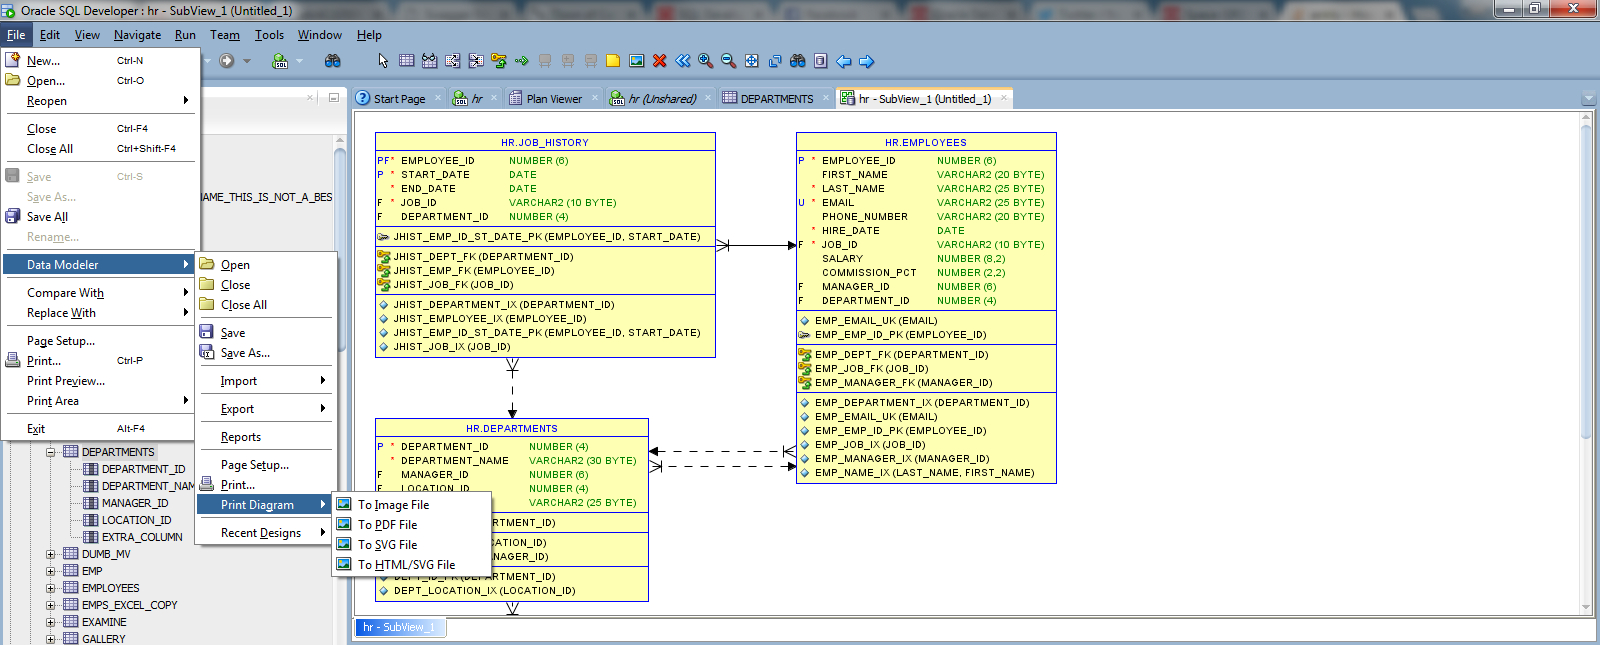 How To Export Erd Diagram To Image In Oracle Data Modeler with Er Diagram Sql Developer